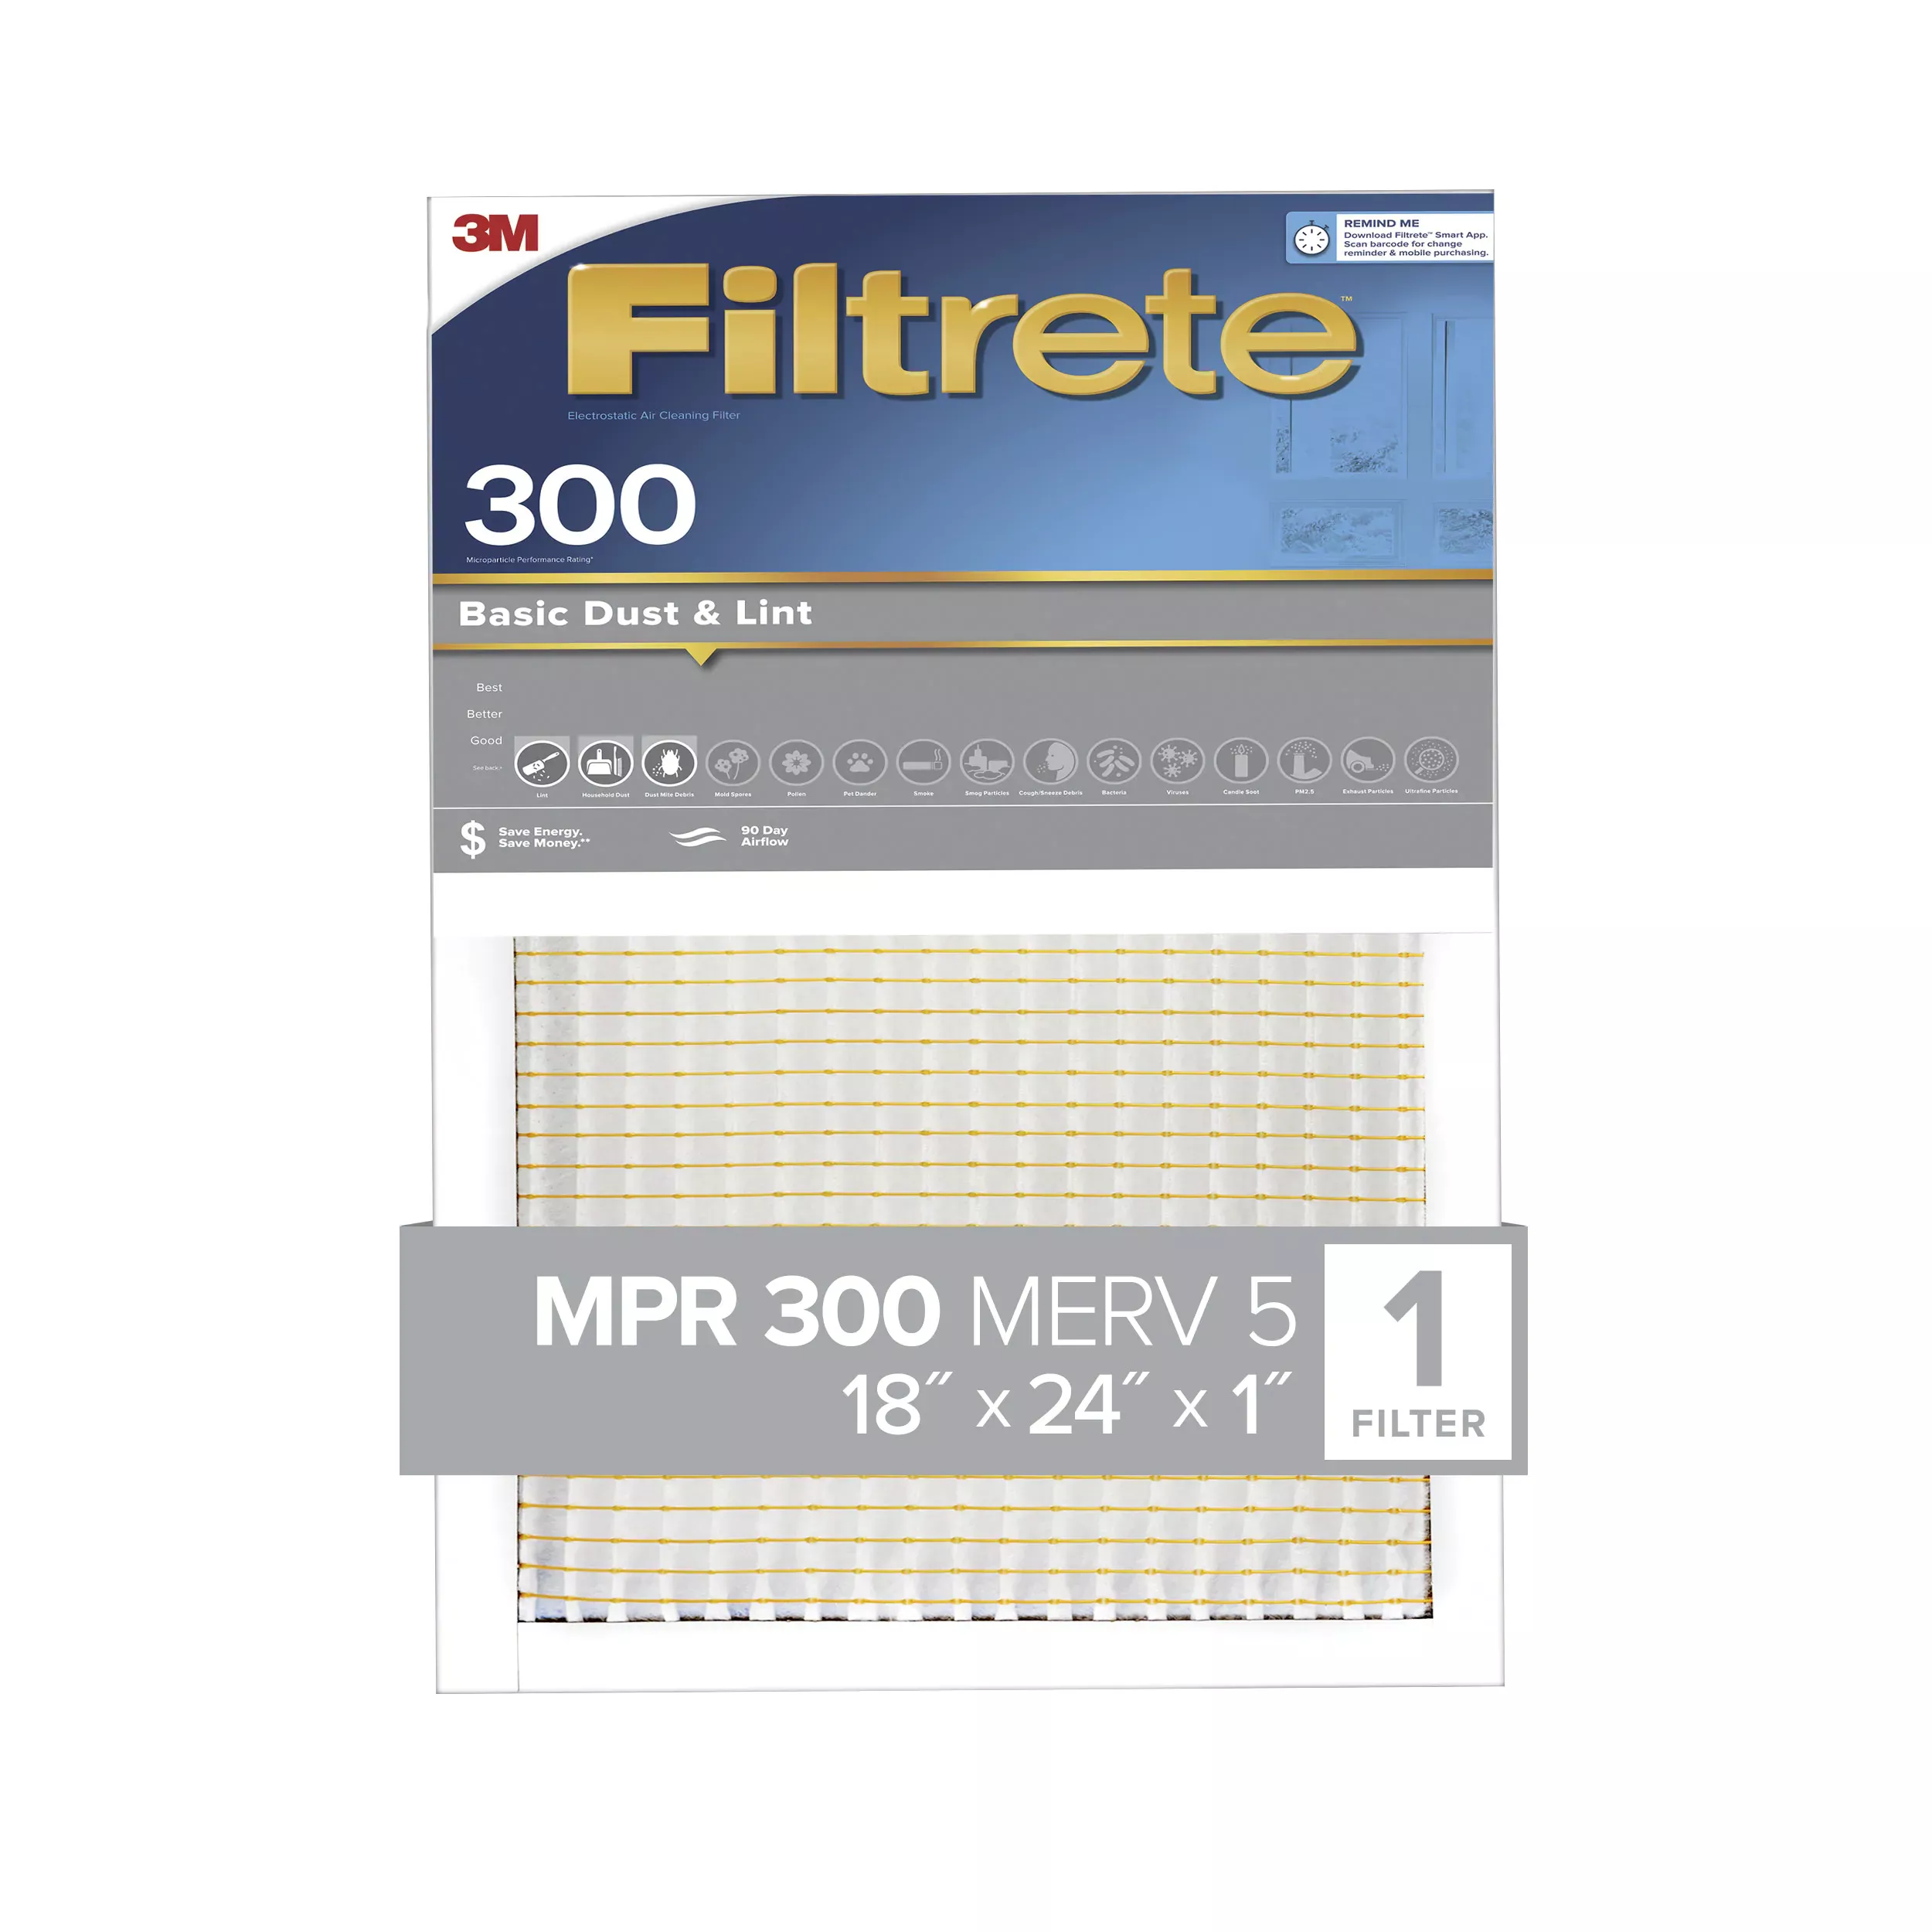 Filtrete™ Basic Dust & Lint Air Filter, 300 MPR, 321-4, 18 in x 24 in x
1 in (45.7 cm x 60.9 cm x 2.5 cm)